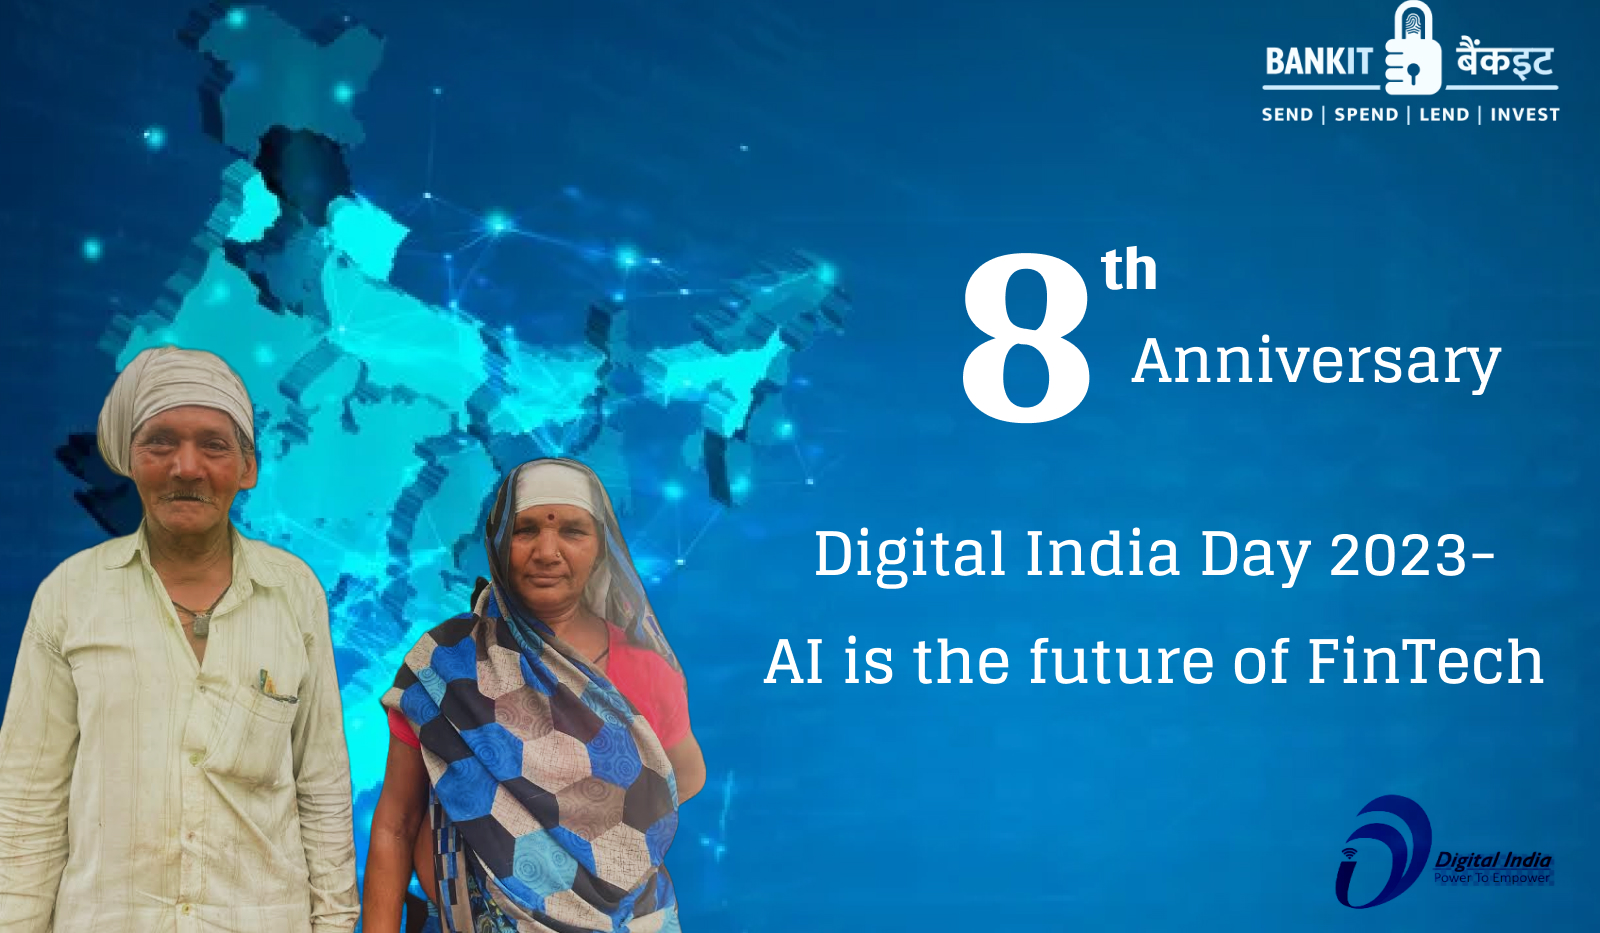 Digital India Day 2023, 8th Anniversary